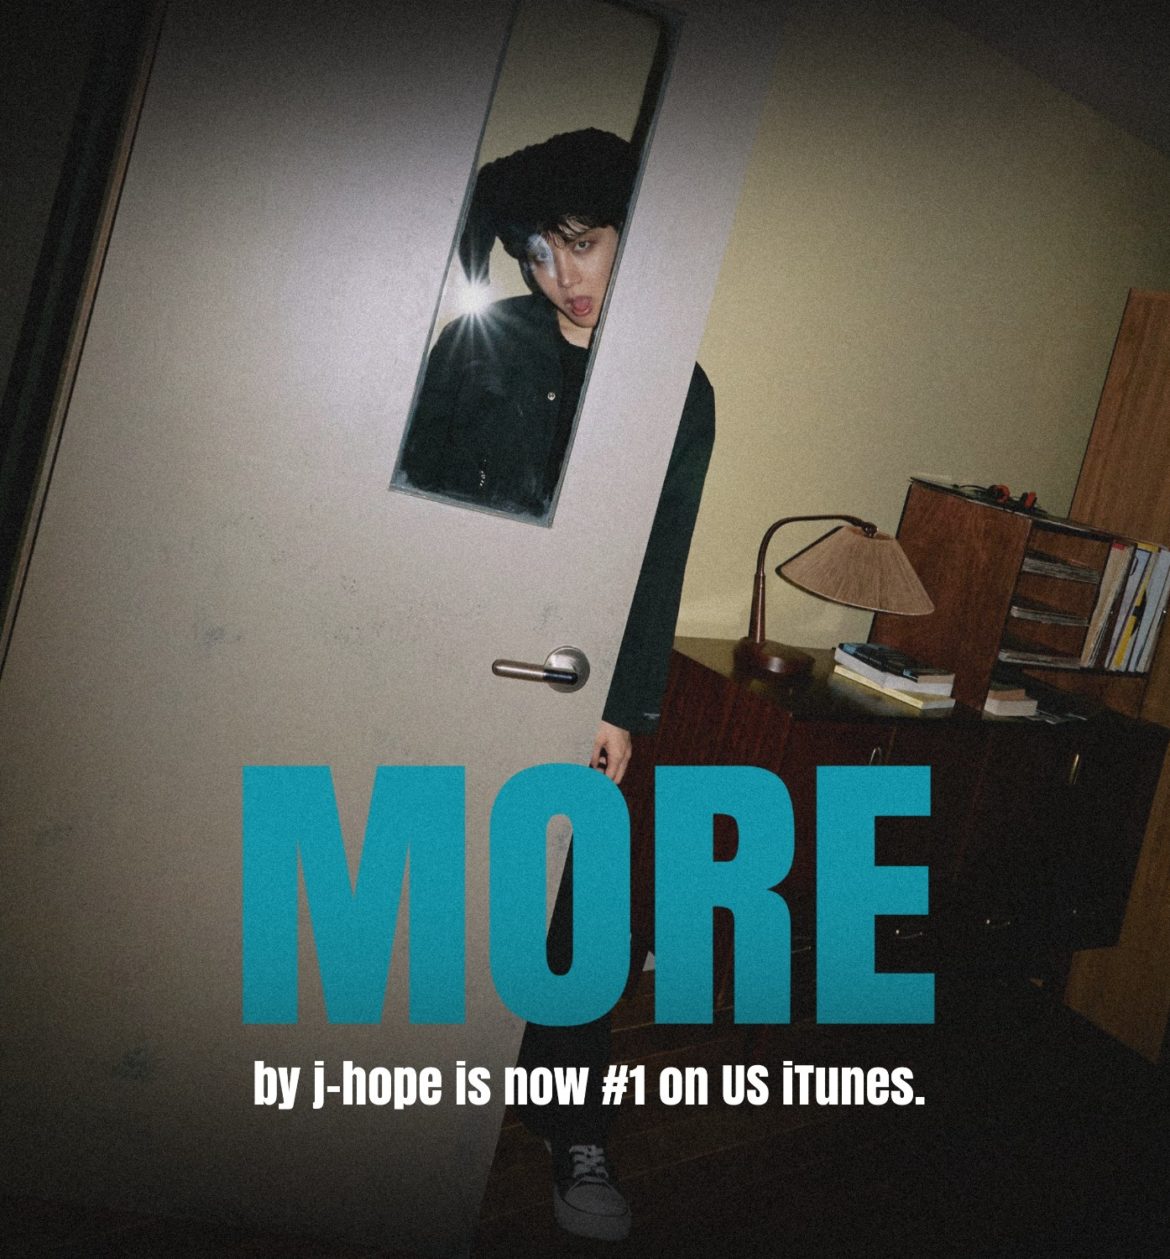 j-hope ‘MORE’ ขึ้นอันดับ 1 iTunes US 🇺🇸 ได้สำเร็จ 🎉